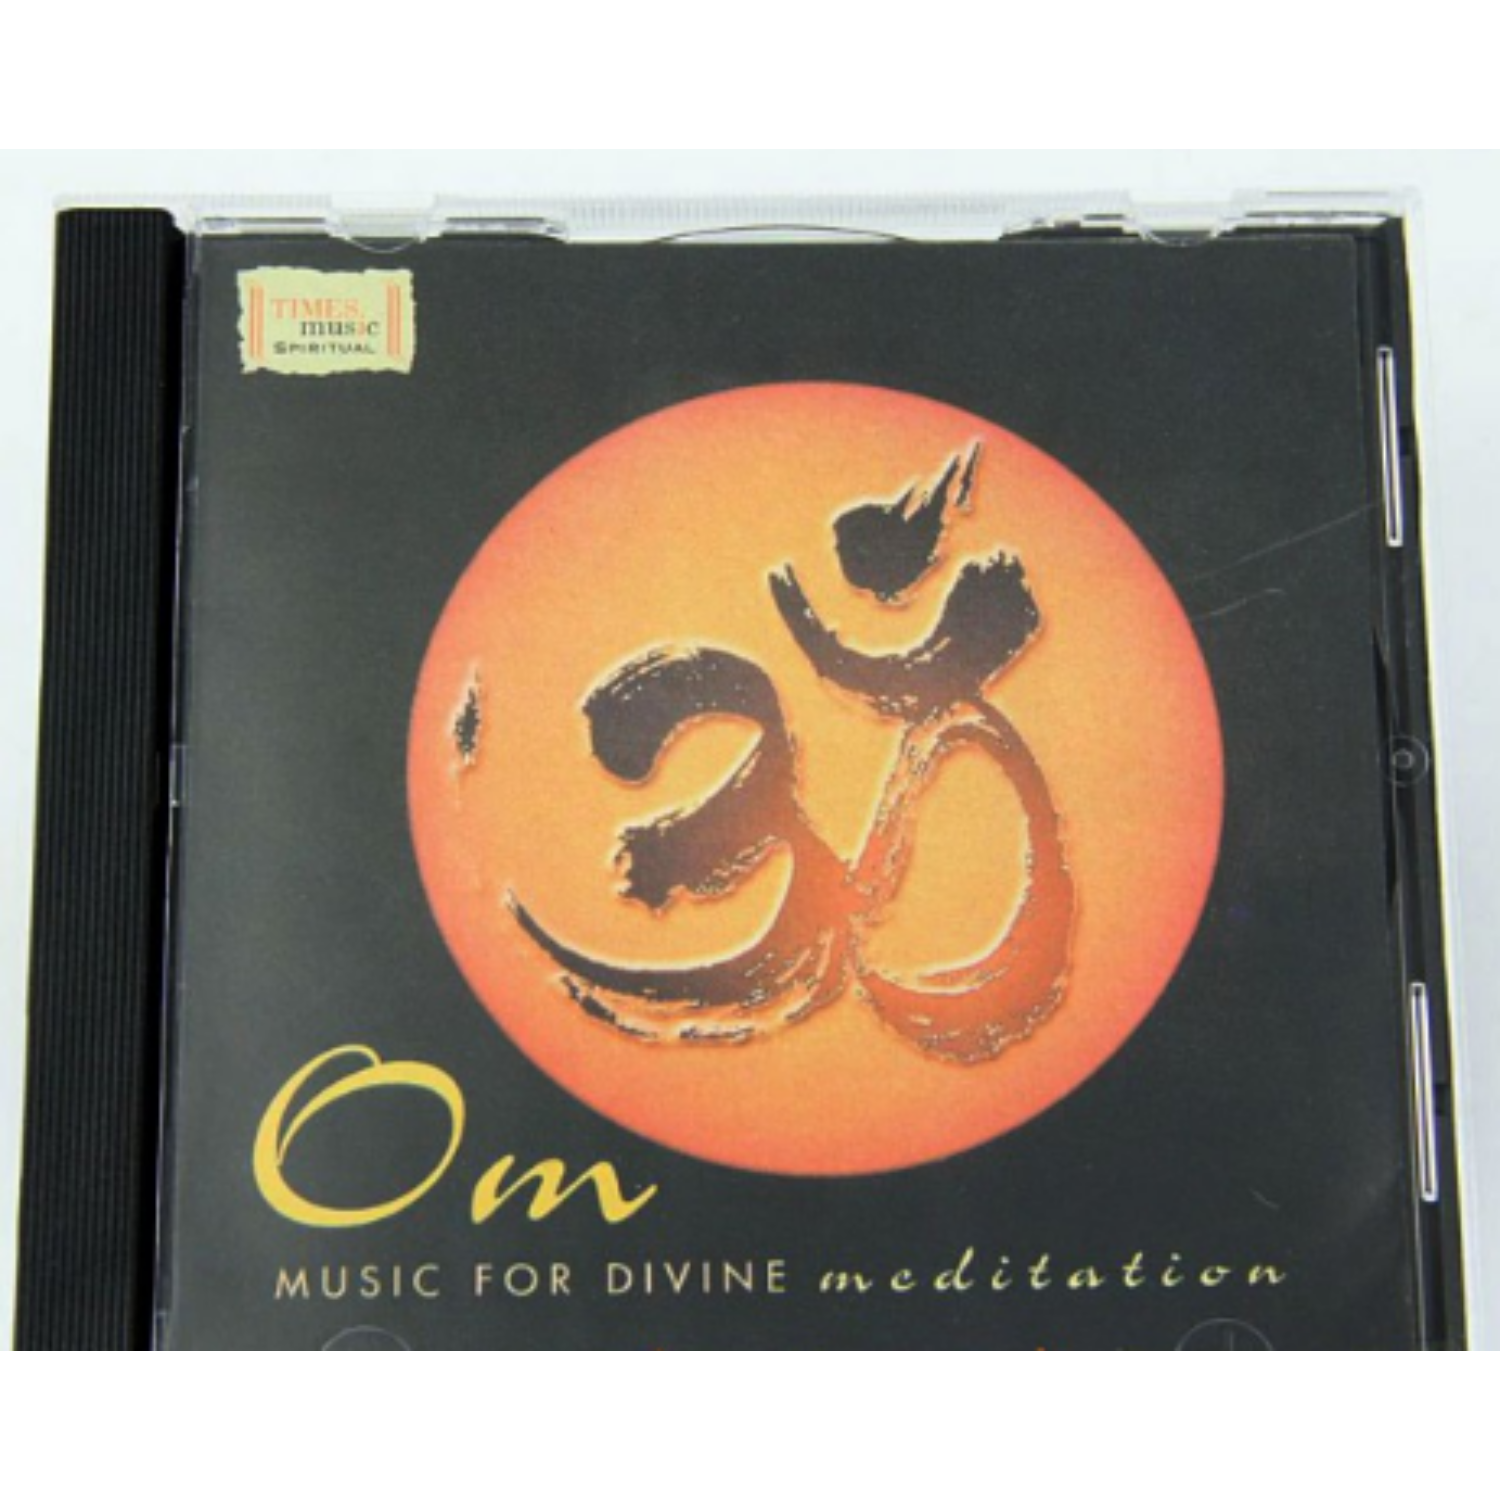 OM CD - Music for divine meditation